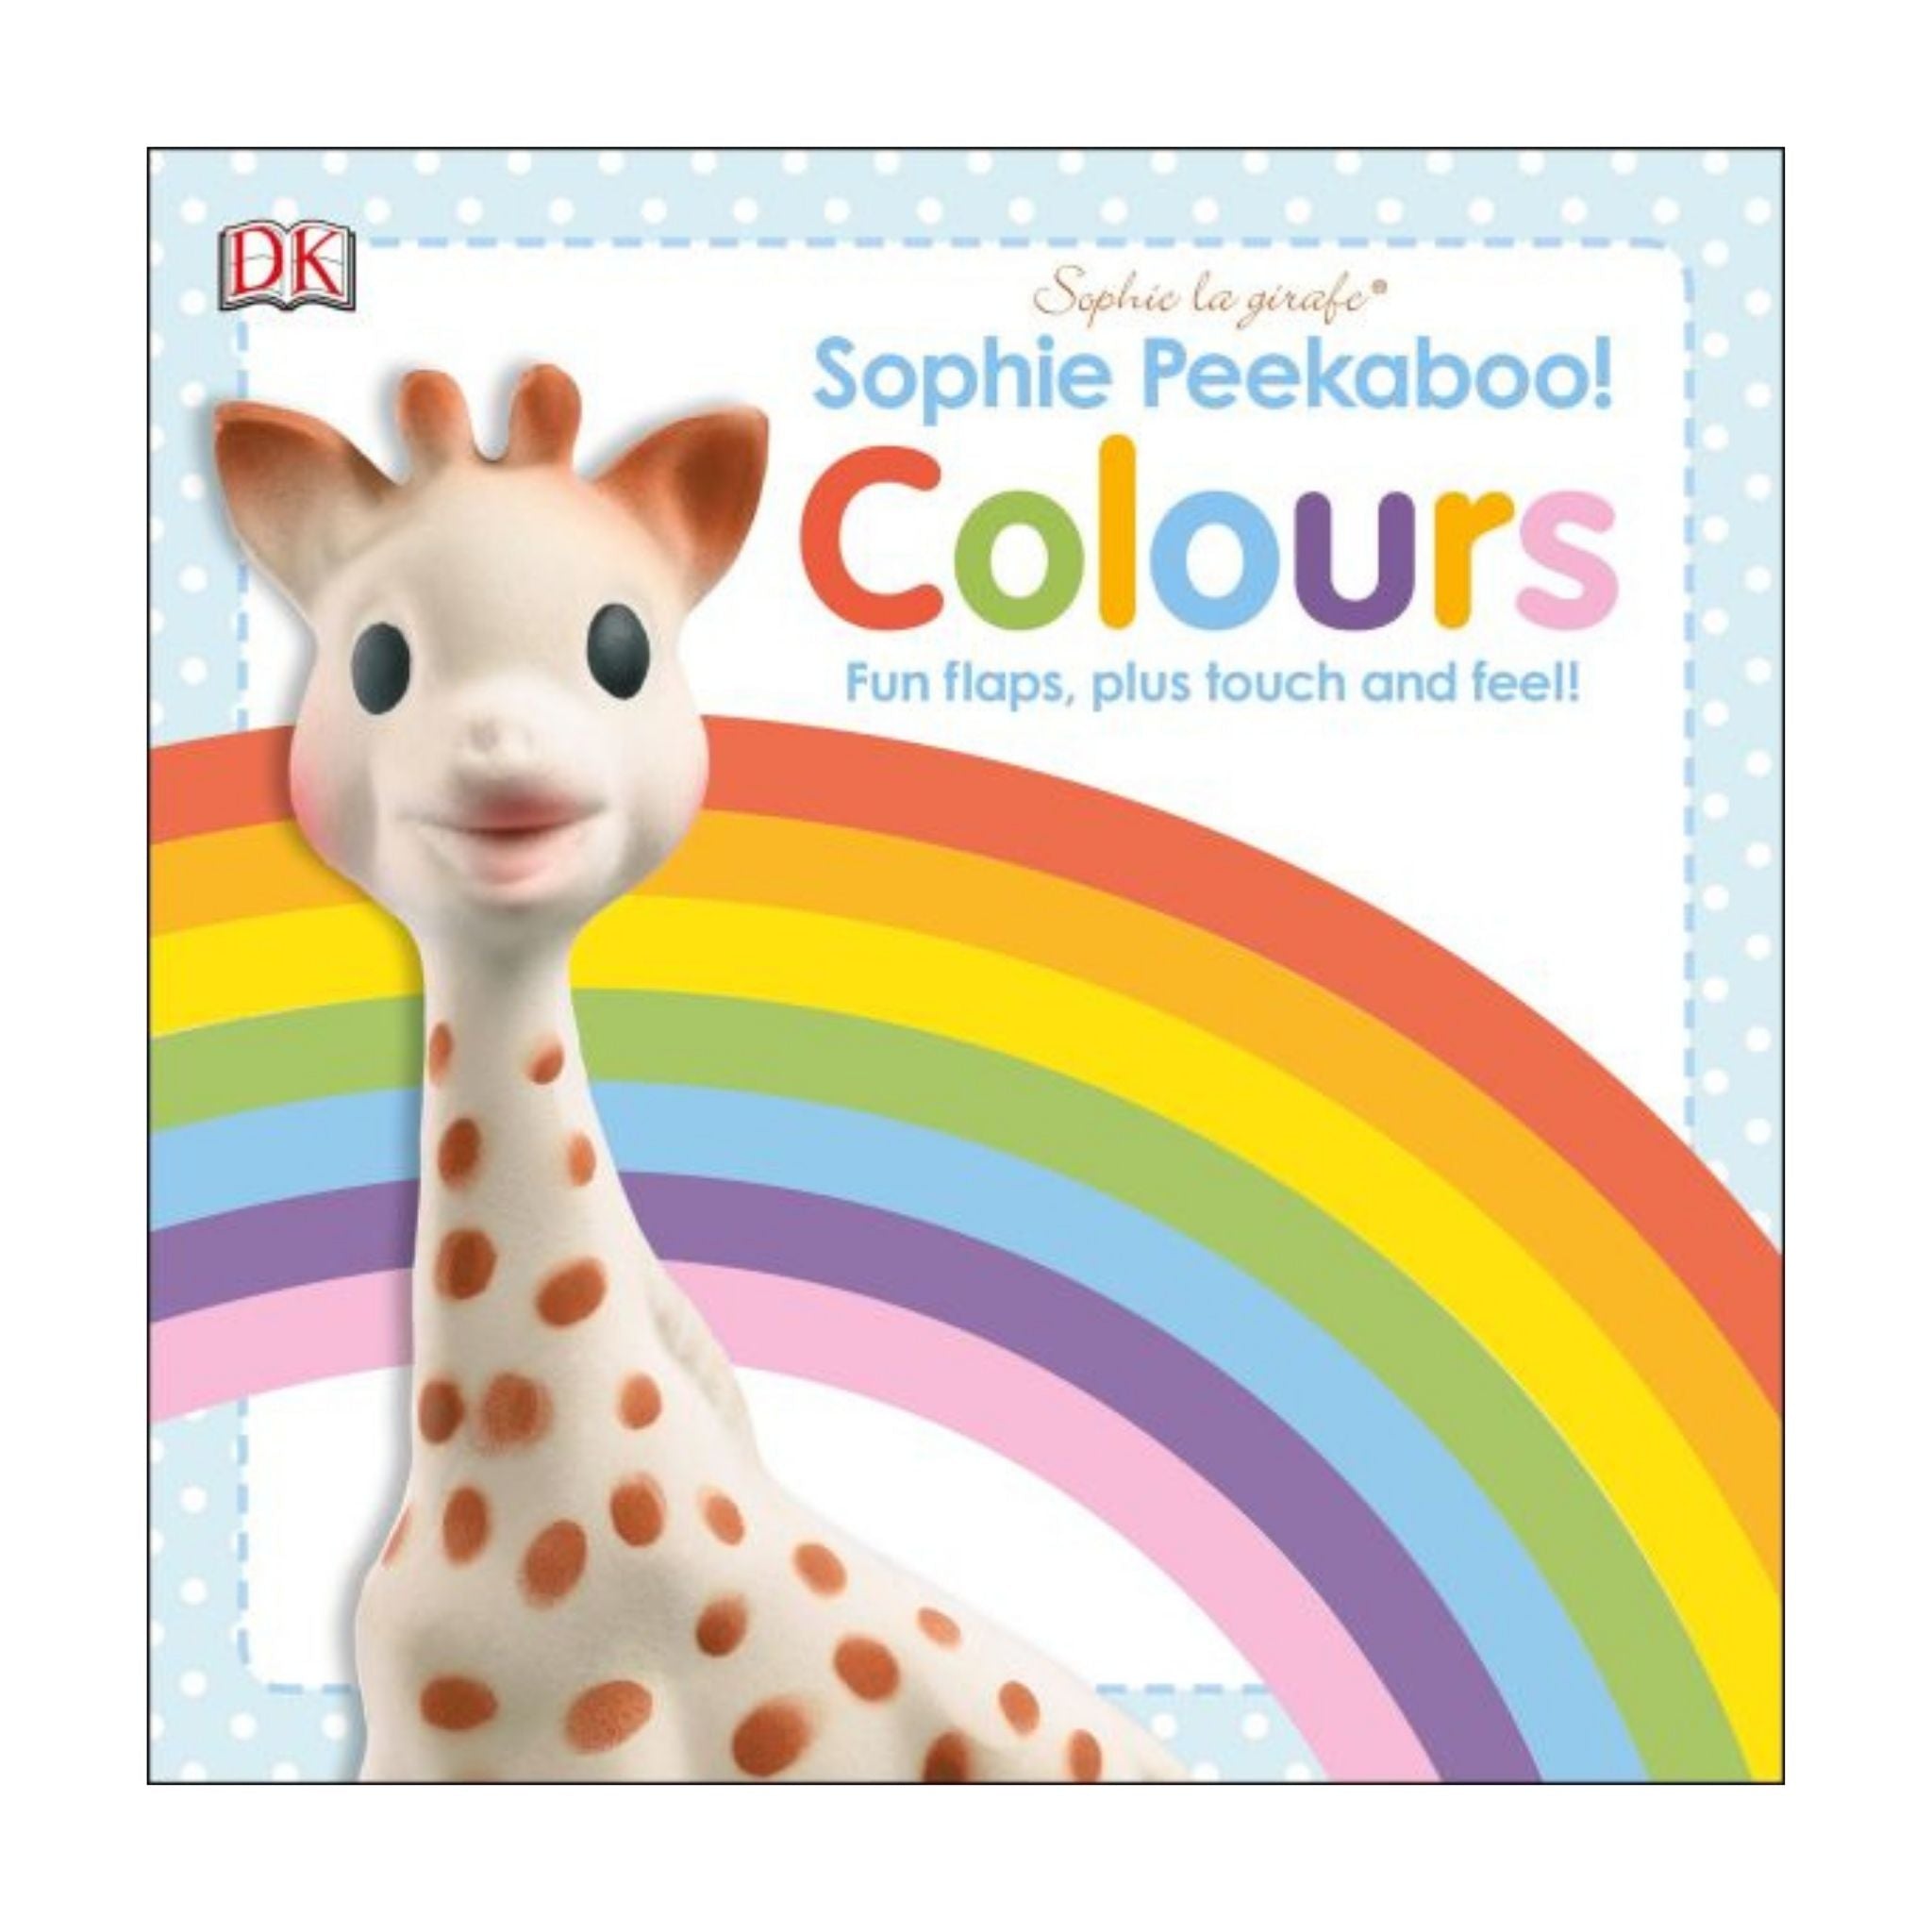 Sophie Peekaboo! Colours